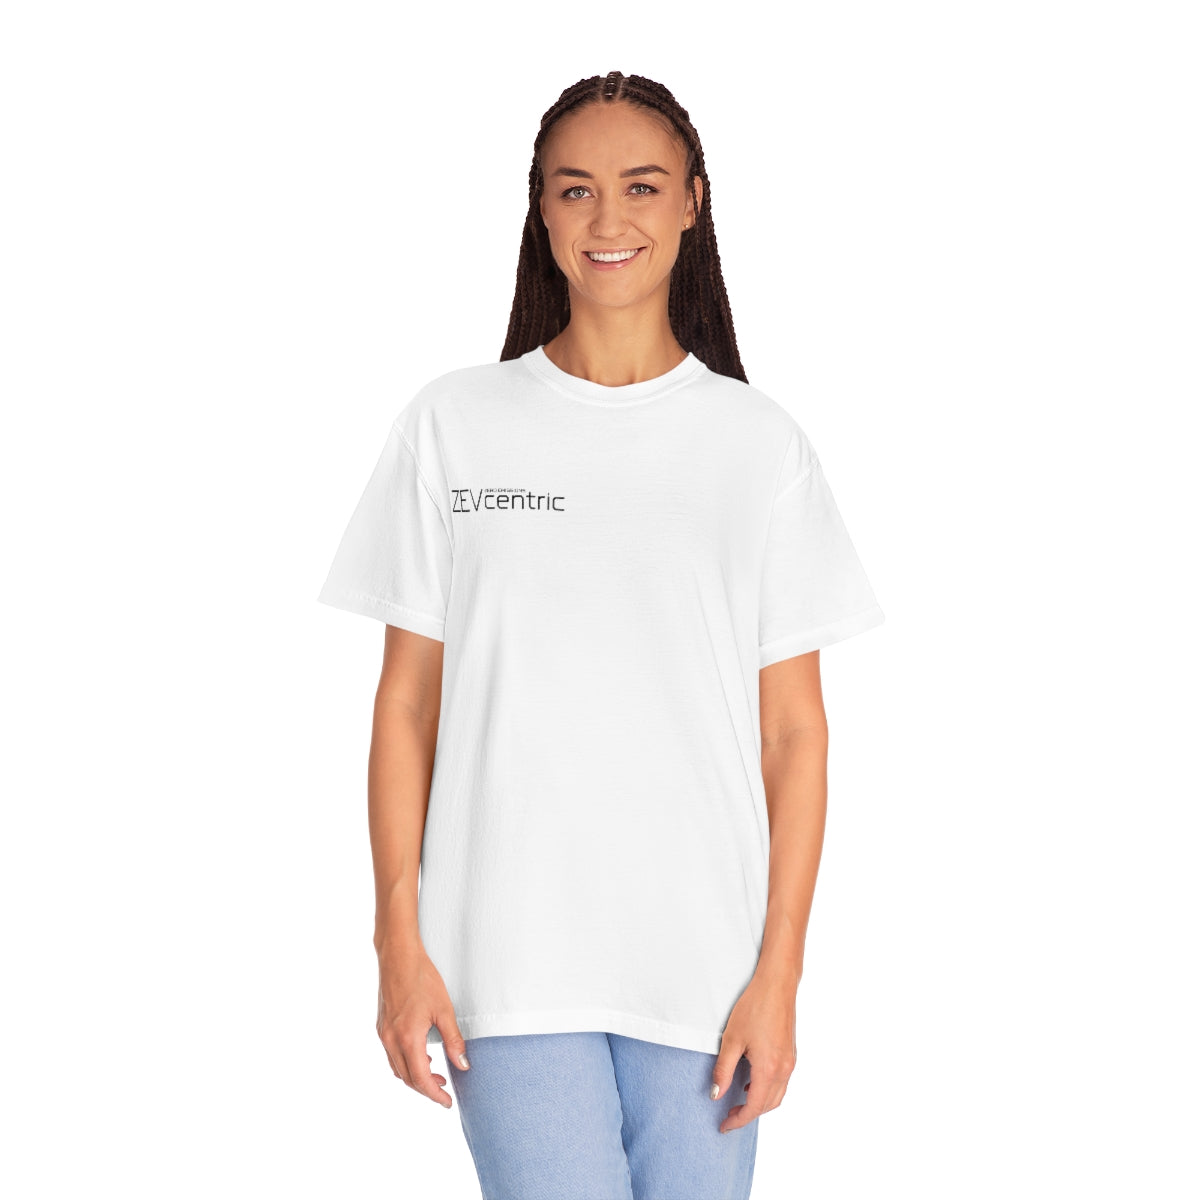 ZEV Garment-Dyed T-shirt